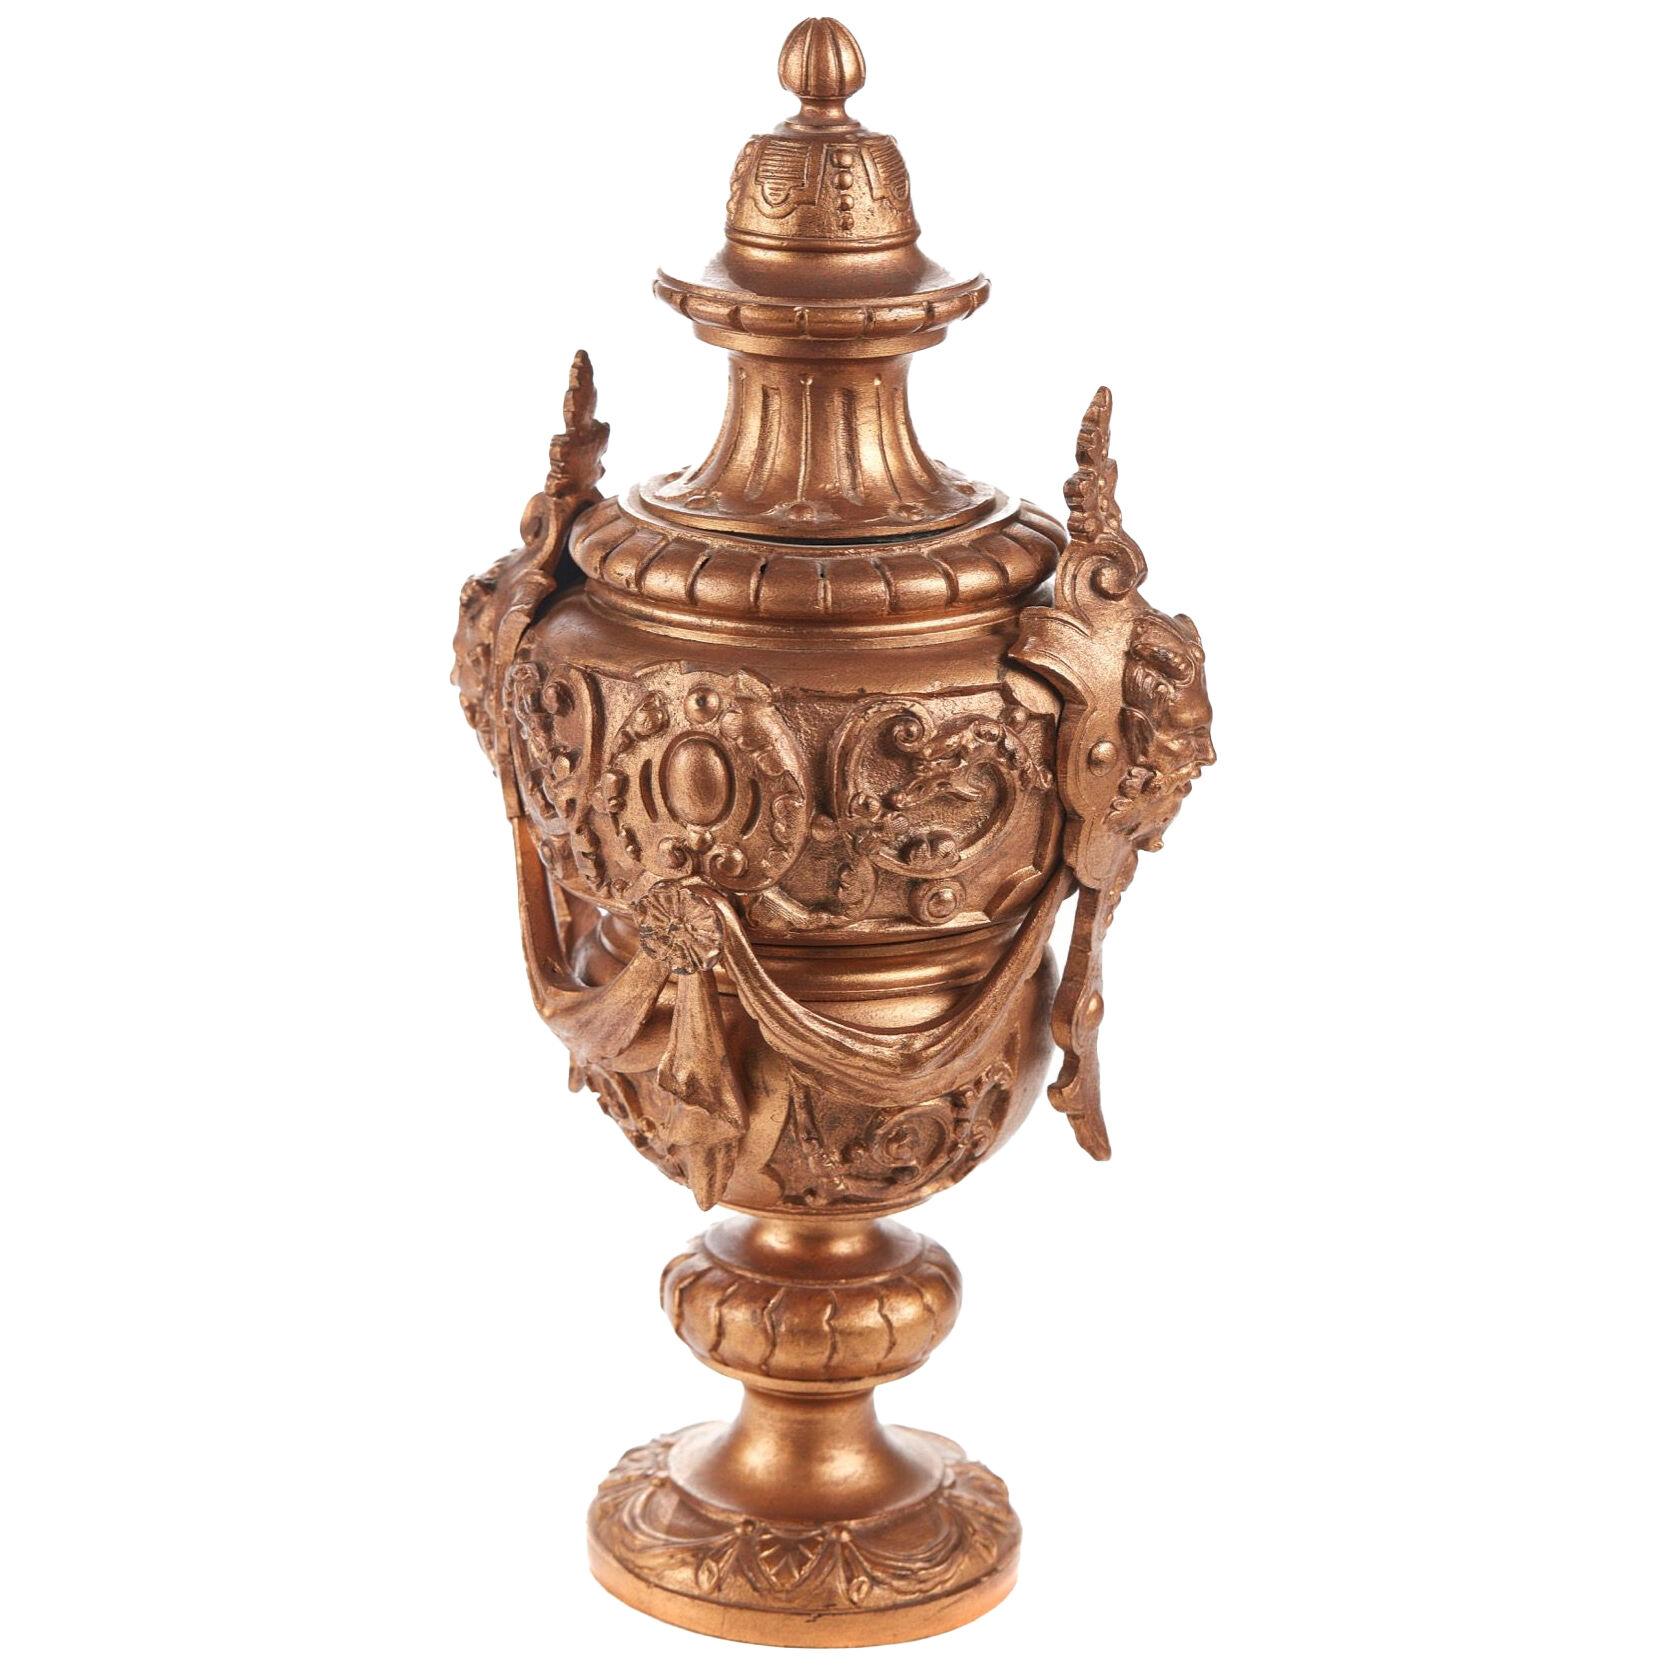 Antique French Ornate Gilded Urn